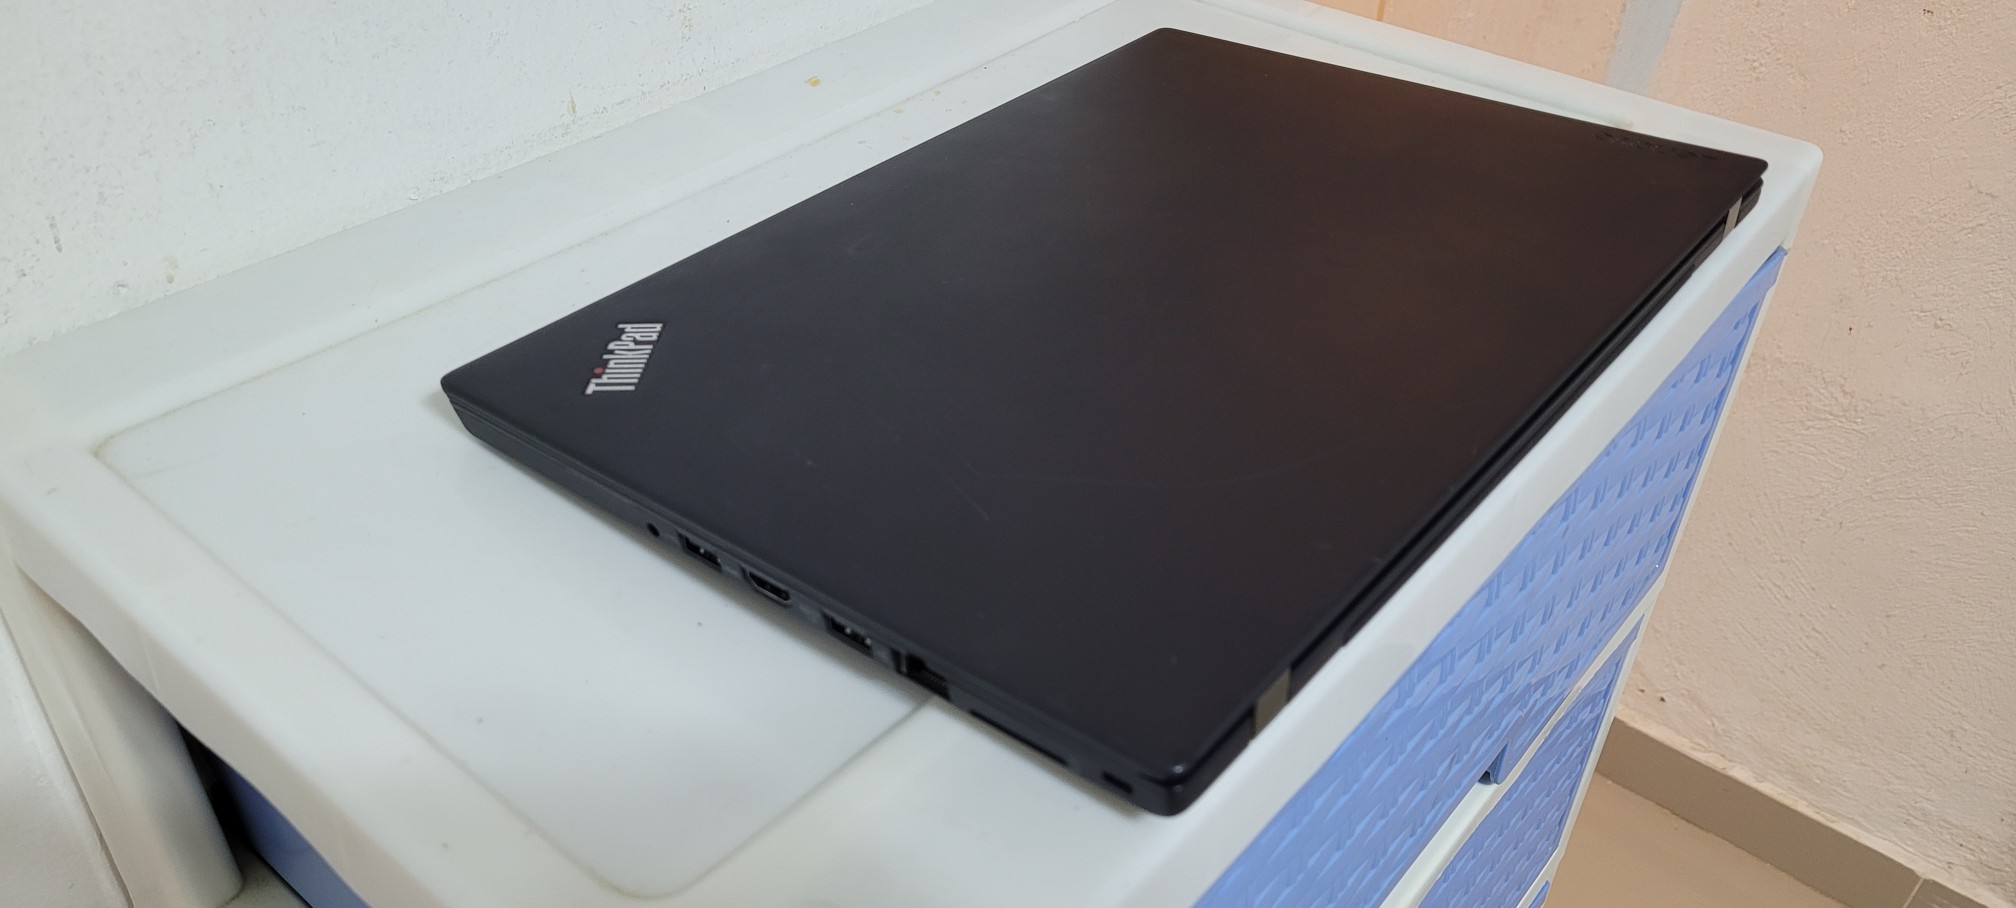 computadoras y laptops - laptop lenovo Slim 14 Pulg Core i7 Ram 8gb Disco 256gb SSD 1080P 2